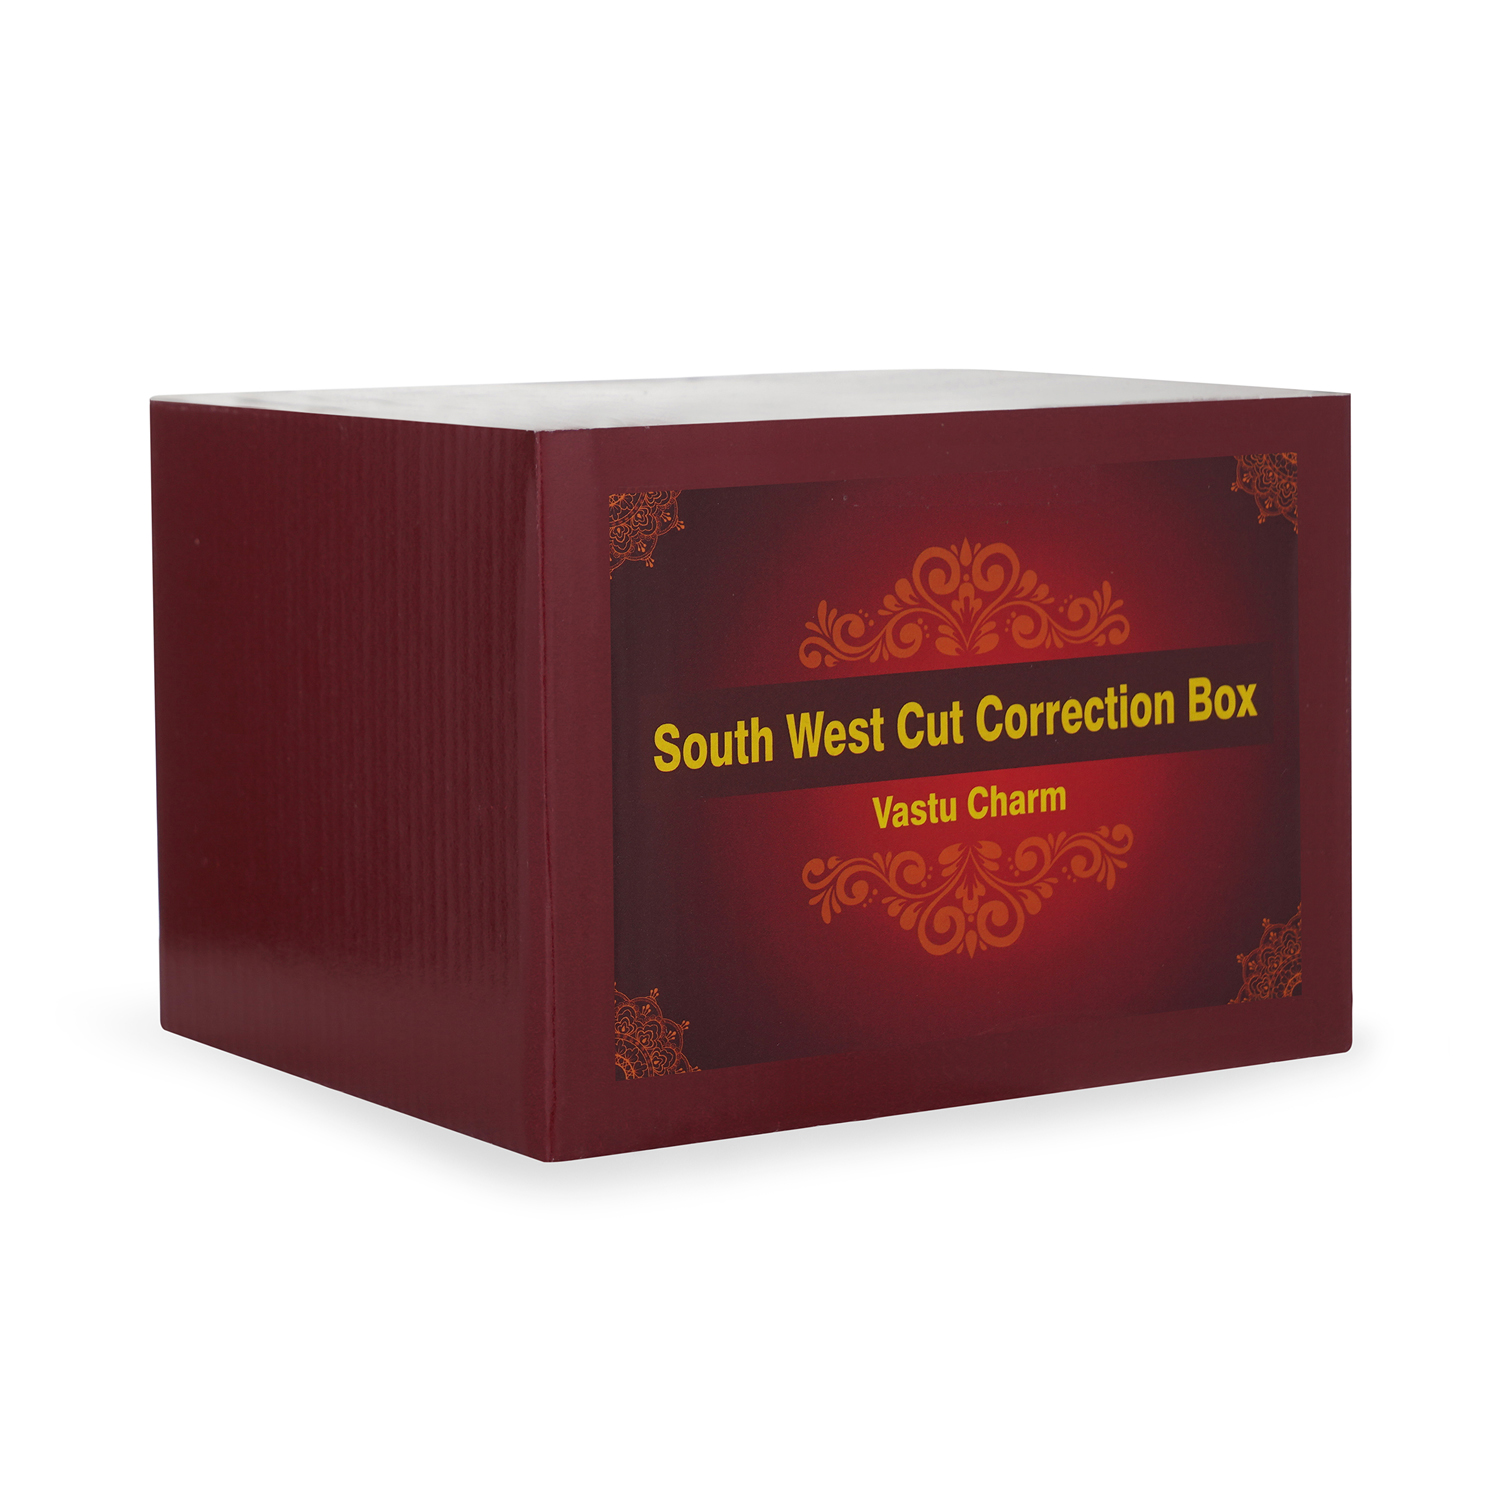 South west cut correction box